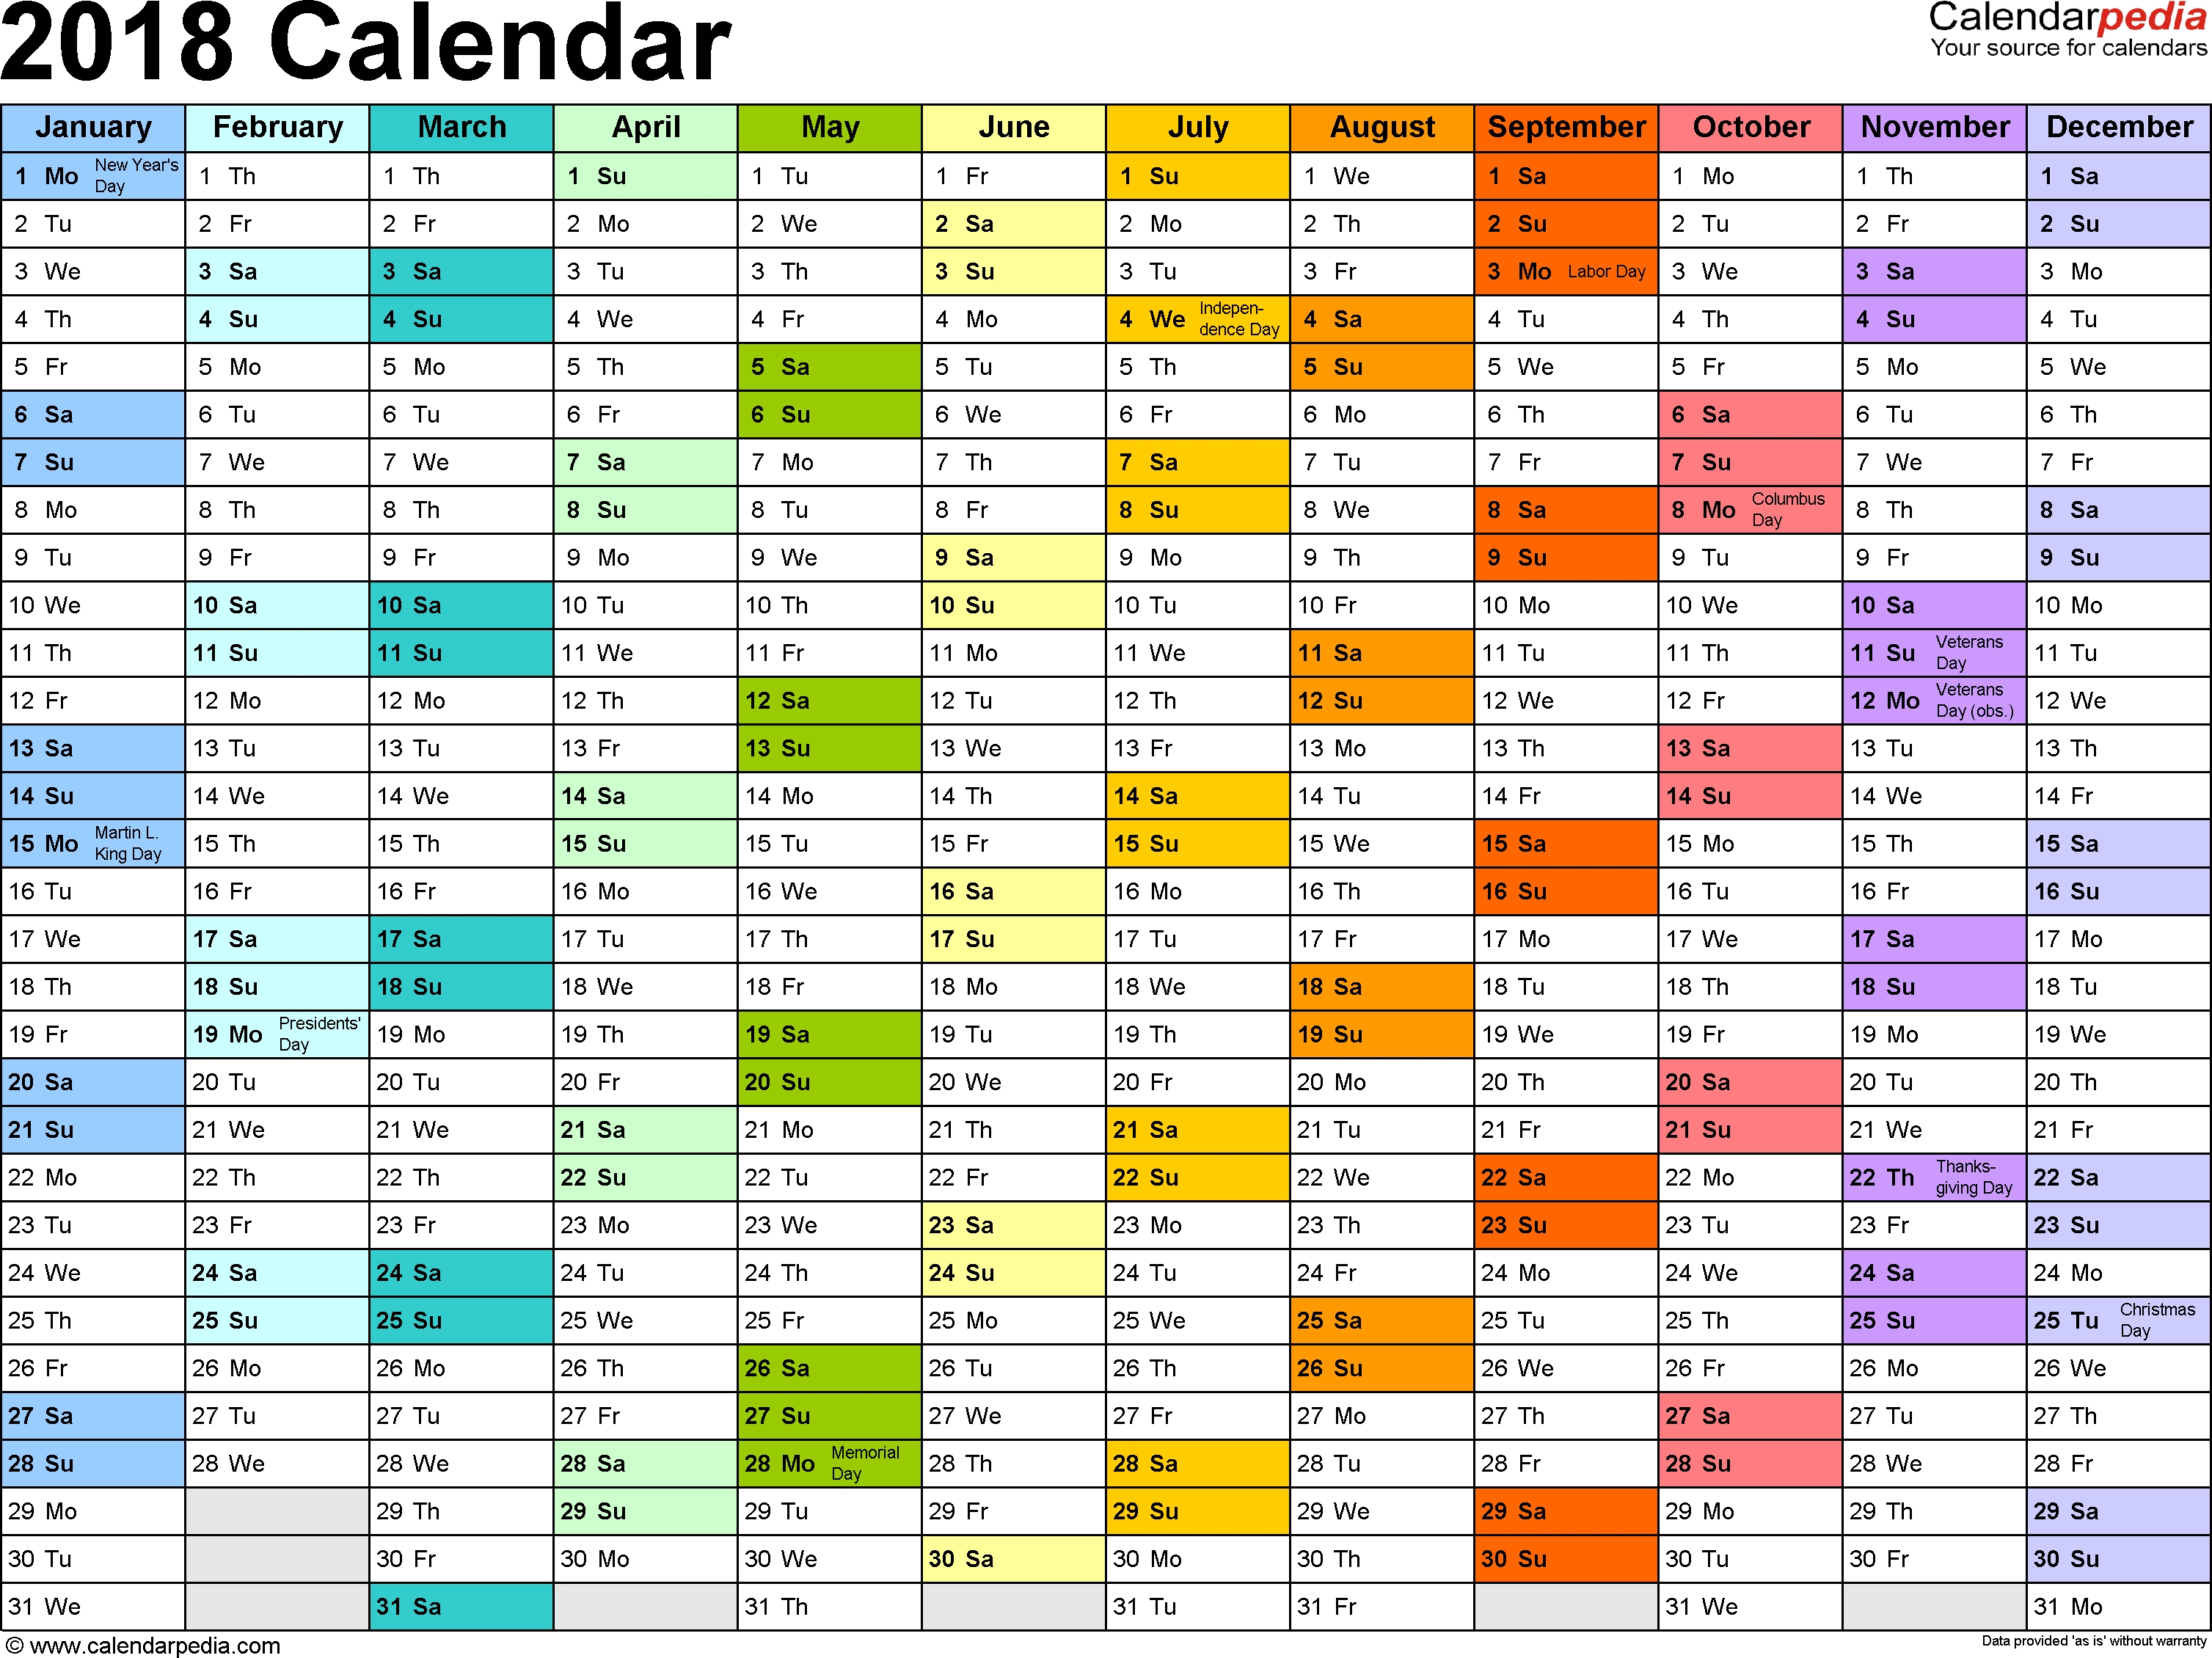 Calendarpedia - Your Source For Calendars Year 2020 Calendar - New Zealand